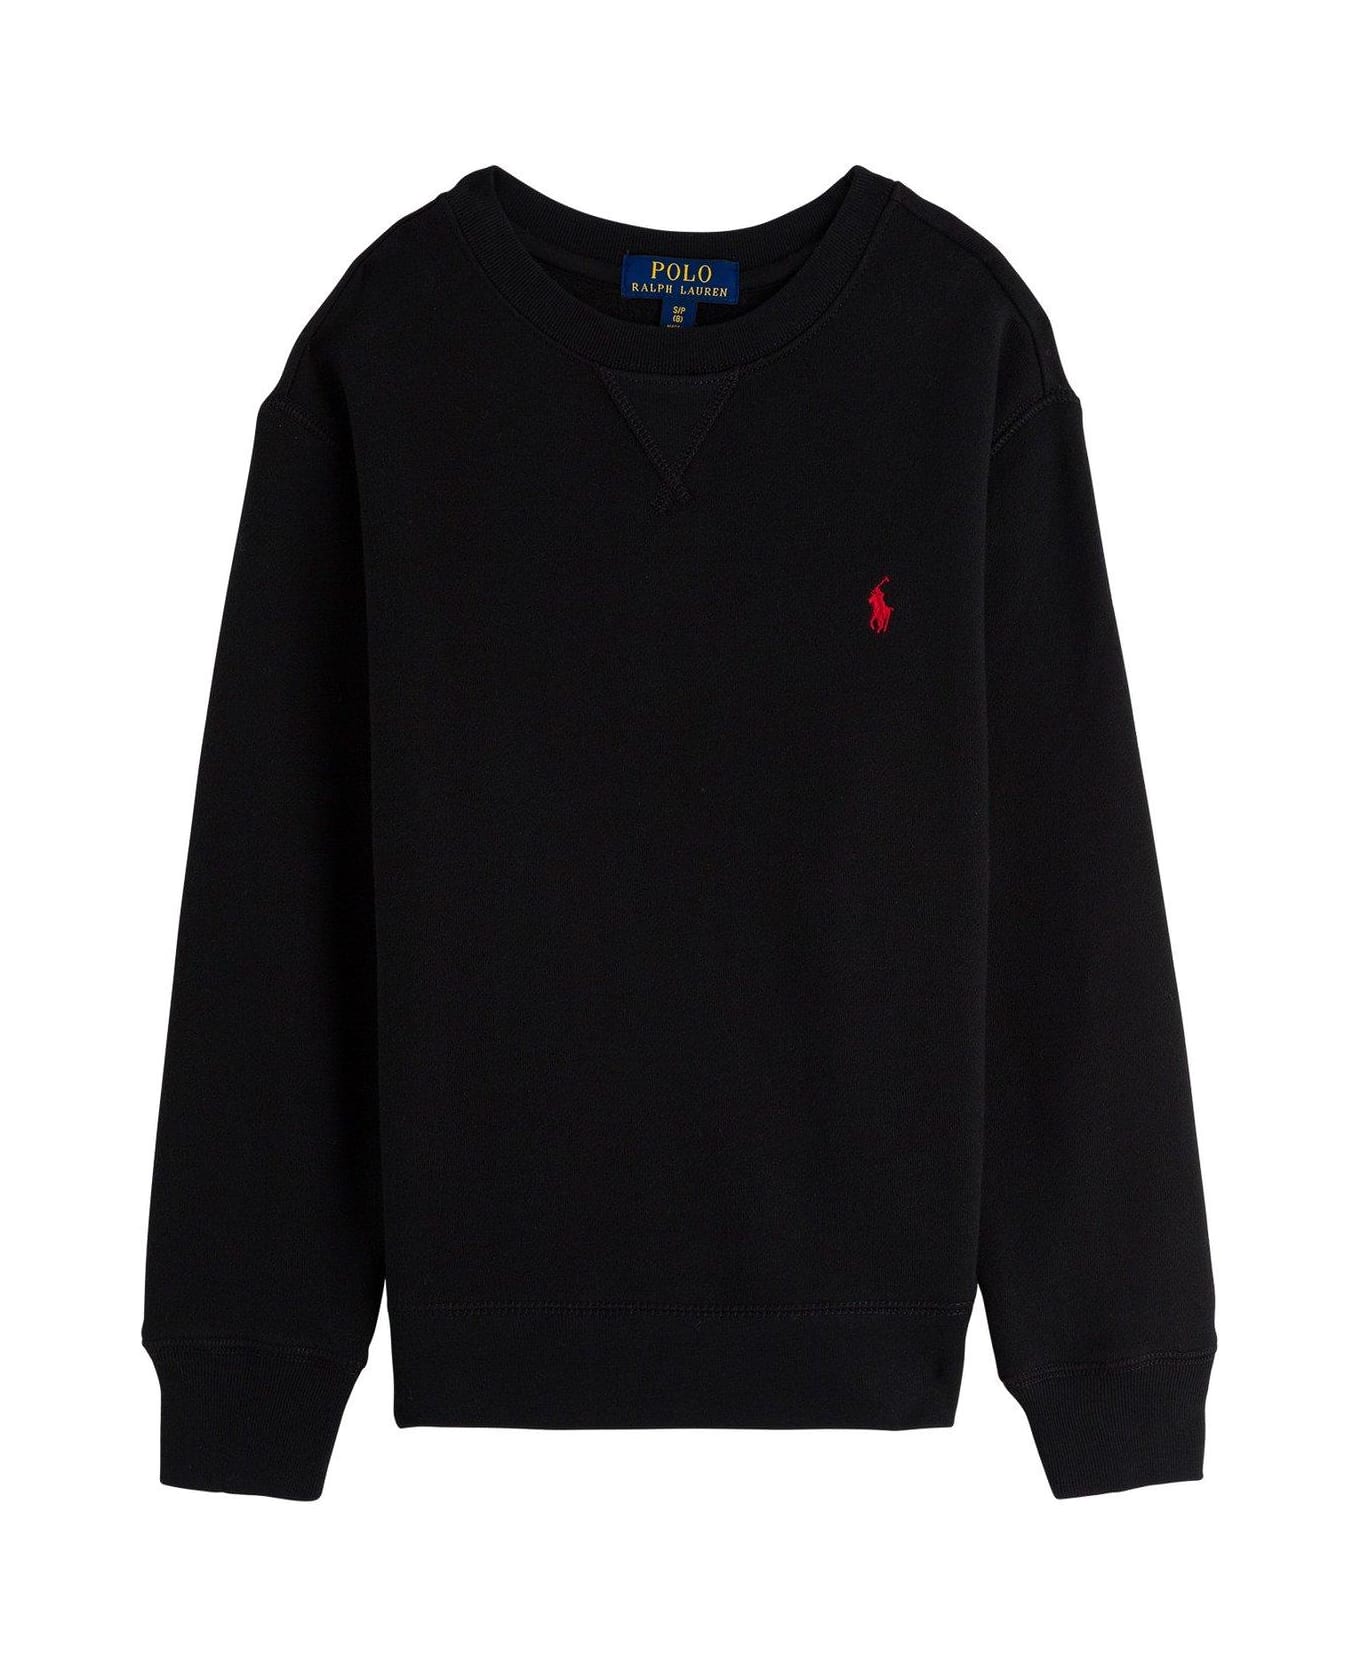 Ralph Lauren Logo Embroidered Sweatshirt - Polo Black